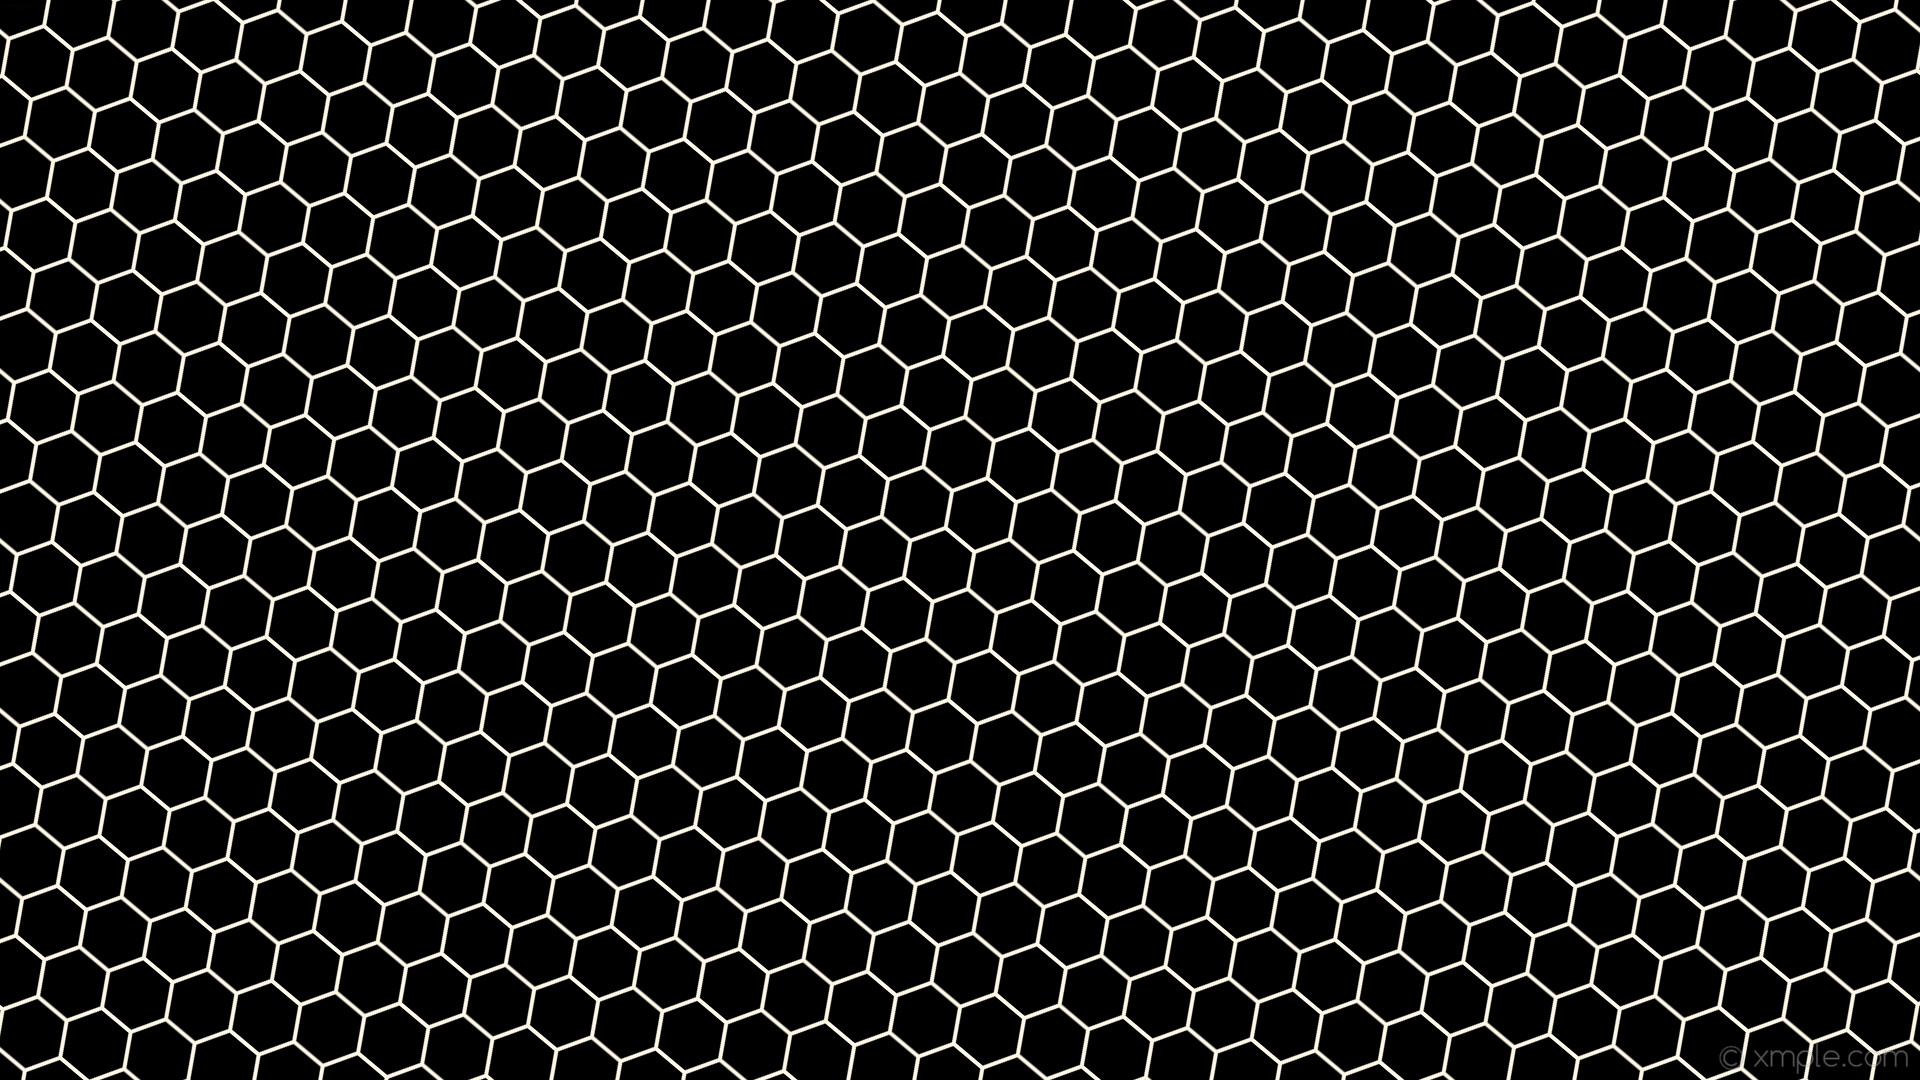 1920x1080 wallpaper beehive black honeycomb white hexagon old lace #000000 #fdf5e6  diagonal 50Â° 4px